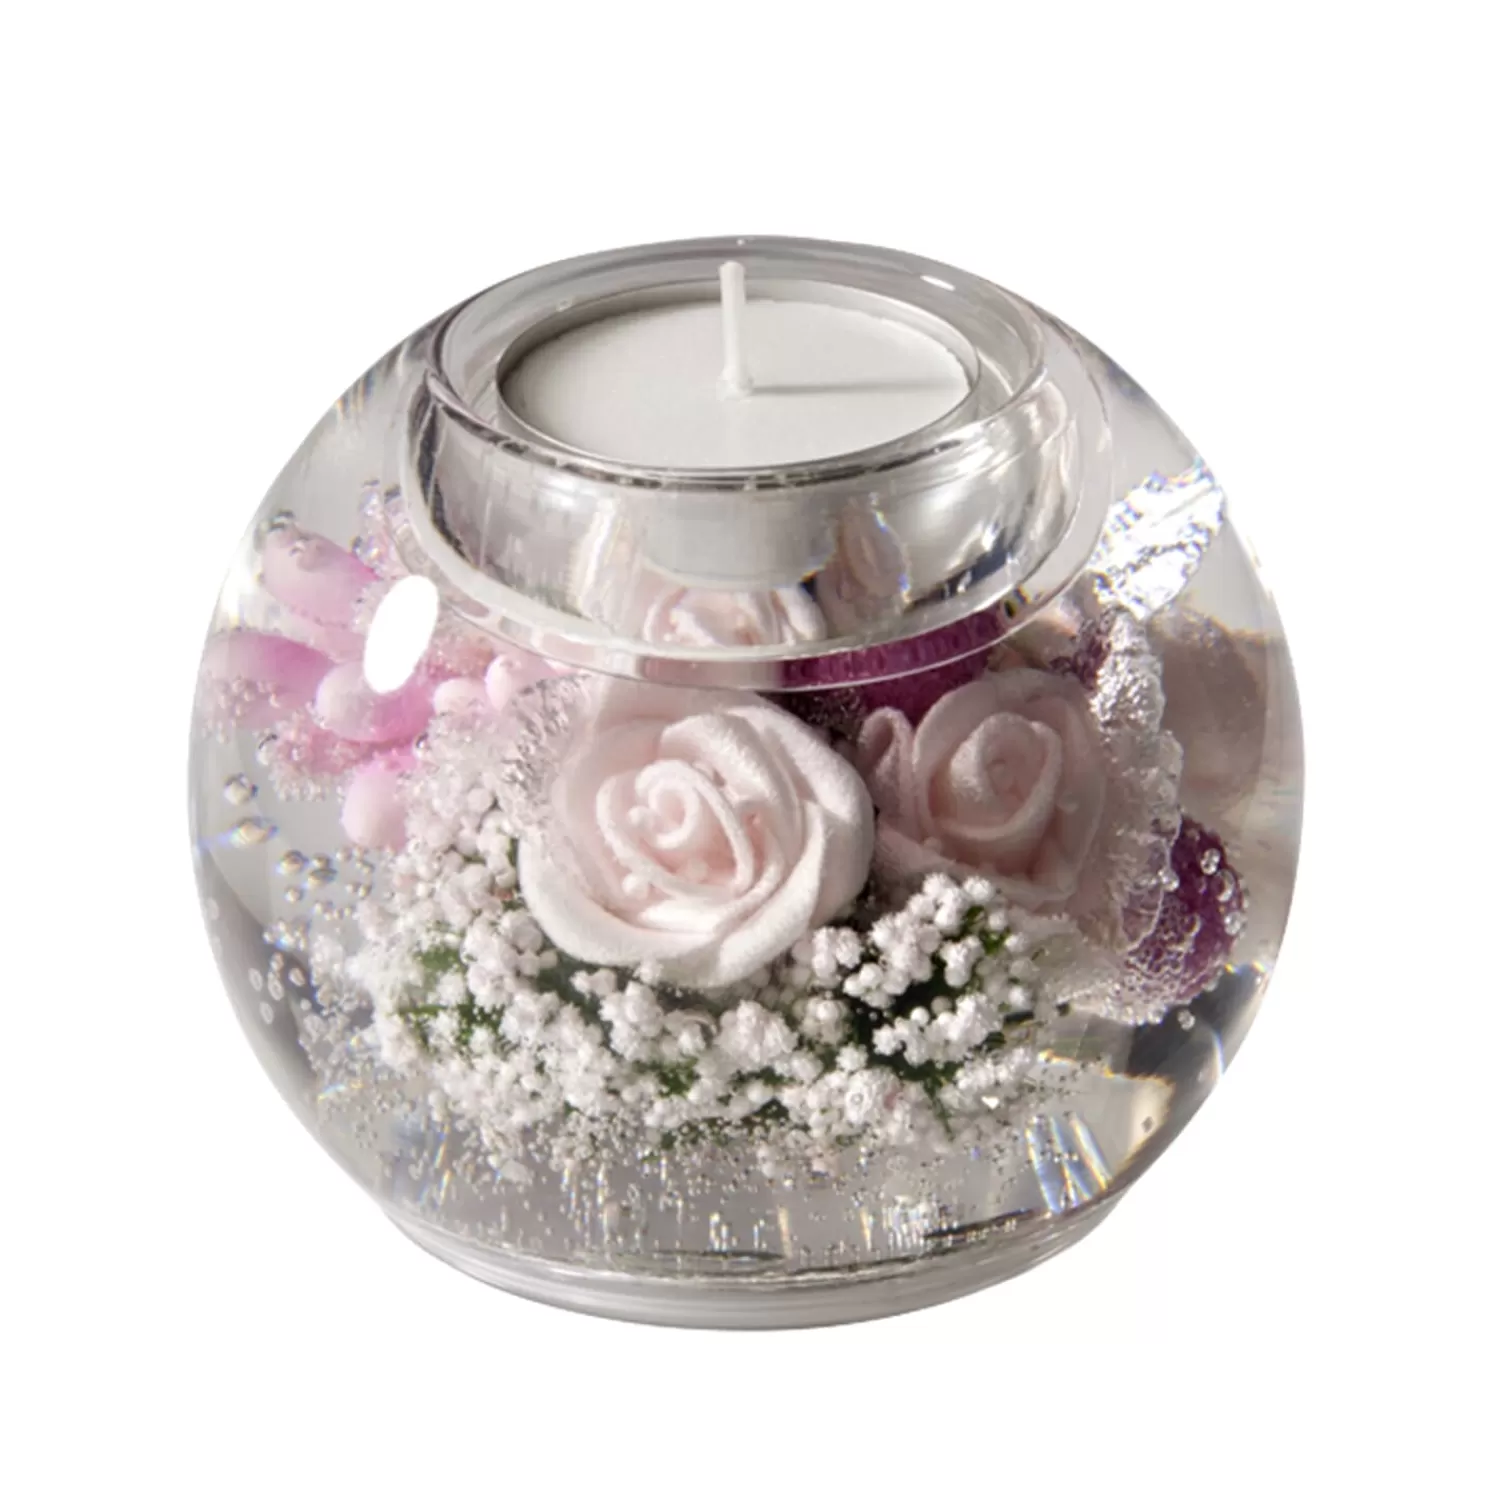 Käthe Wohlfahrt Kerzen & Teelichthalter<Dreamlight "Little Rose" - Kerzenhalter Mercur